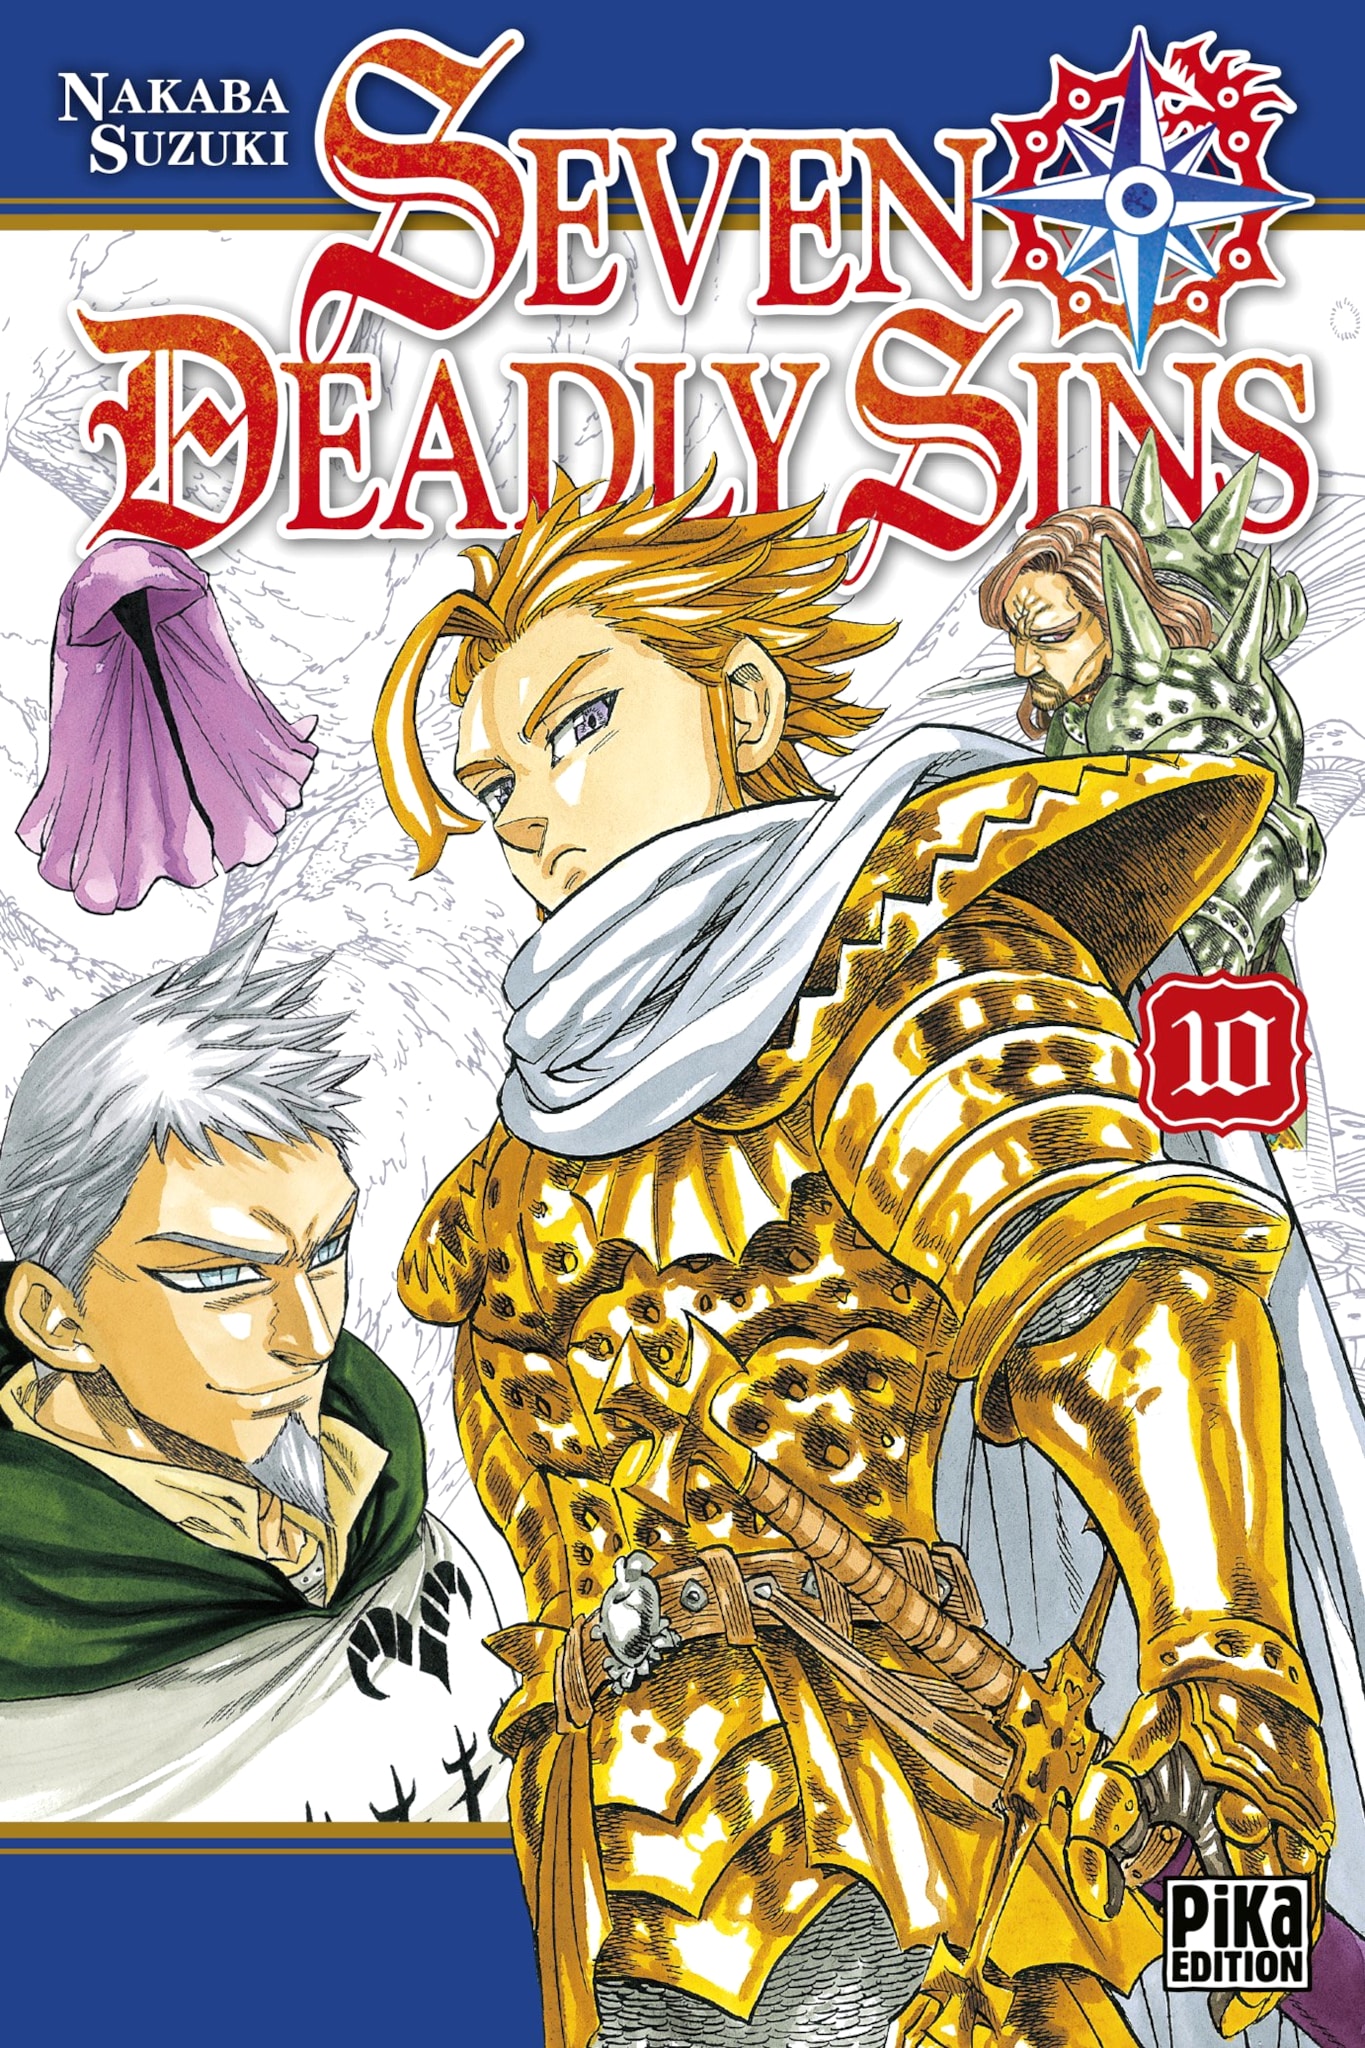 Tome 10 du manga The Seven Deadly Sins